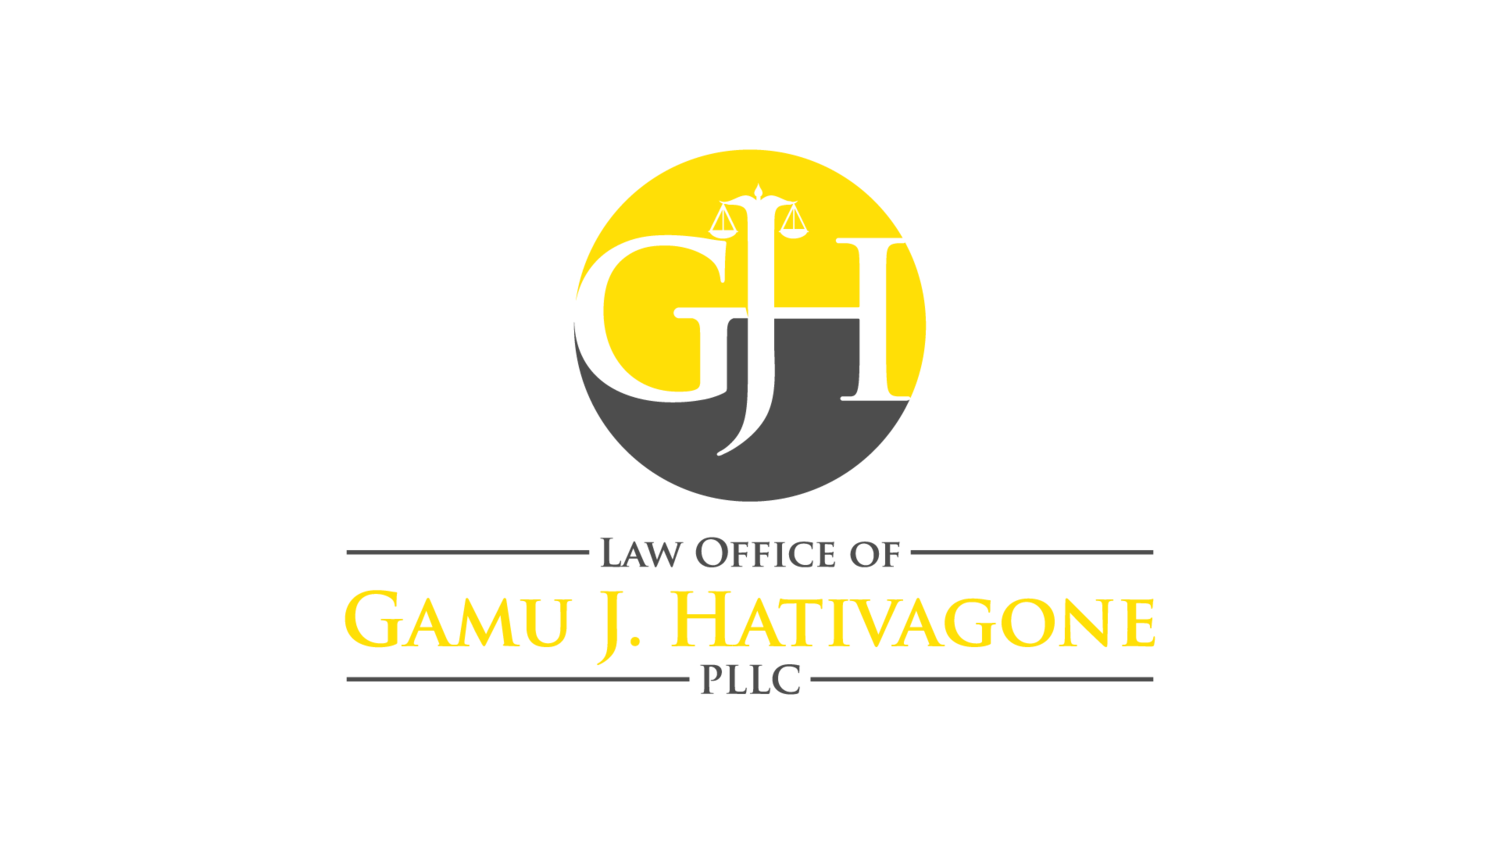 Law Office of Gamu J. Hativagone, PLLC